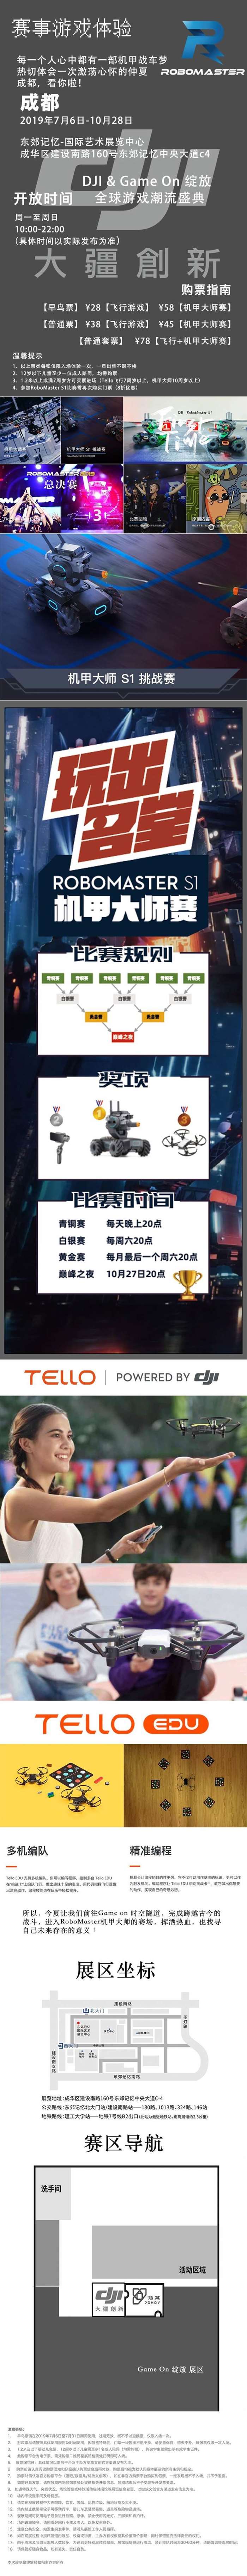 DJI游戏赛事宣传海报.jpg